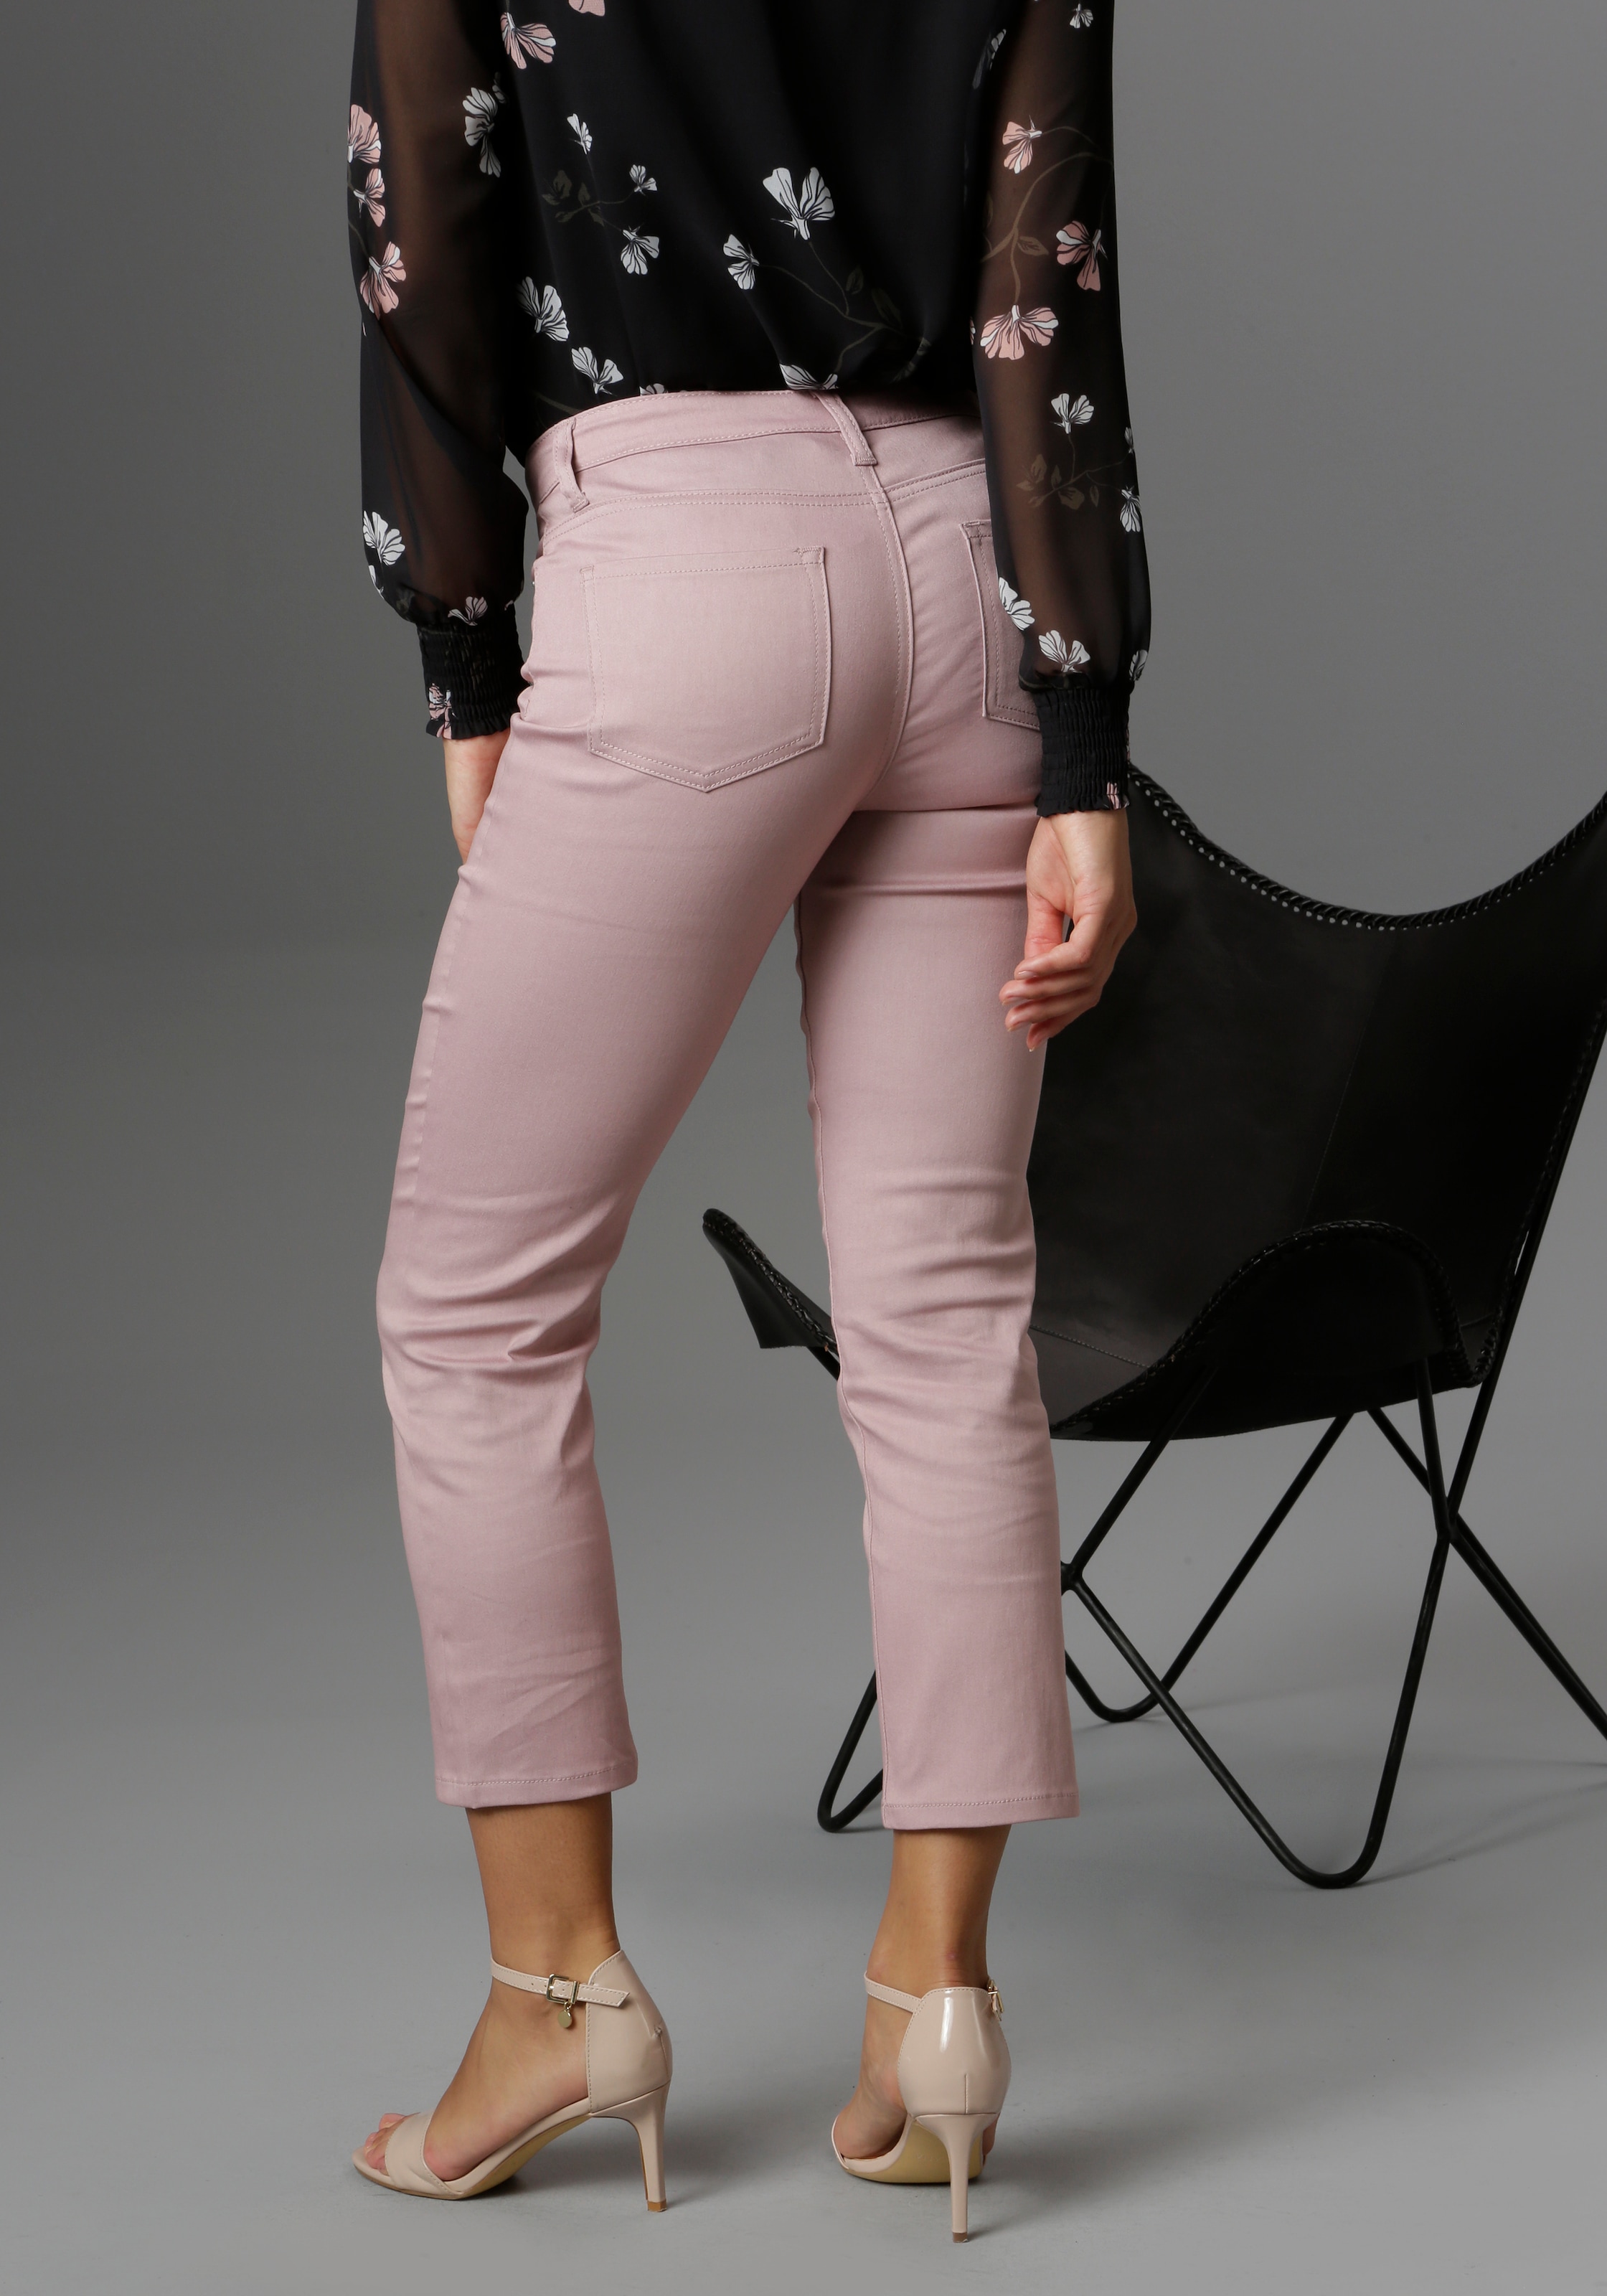 Aniston SELECTED Straight-Jeans, in verkürzter cropped Länge bestellen bei  OTTO